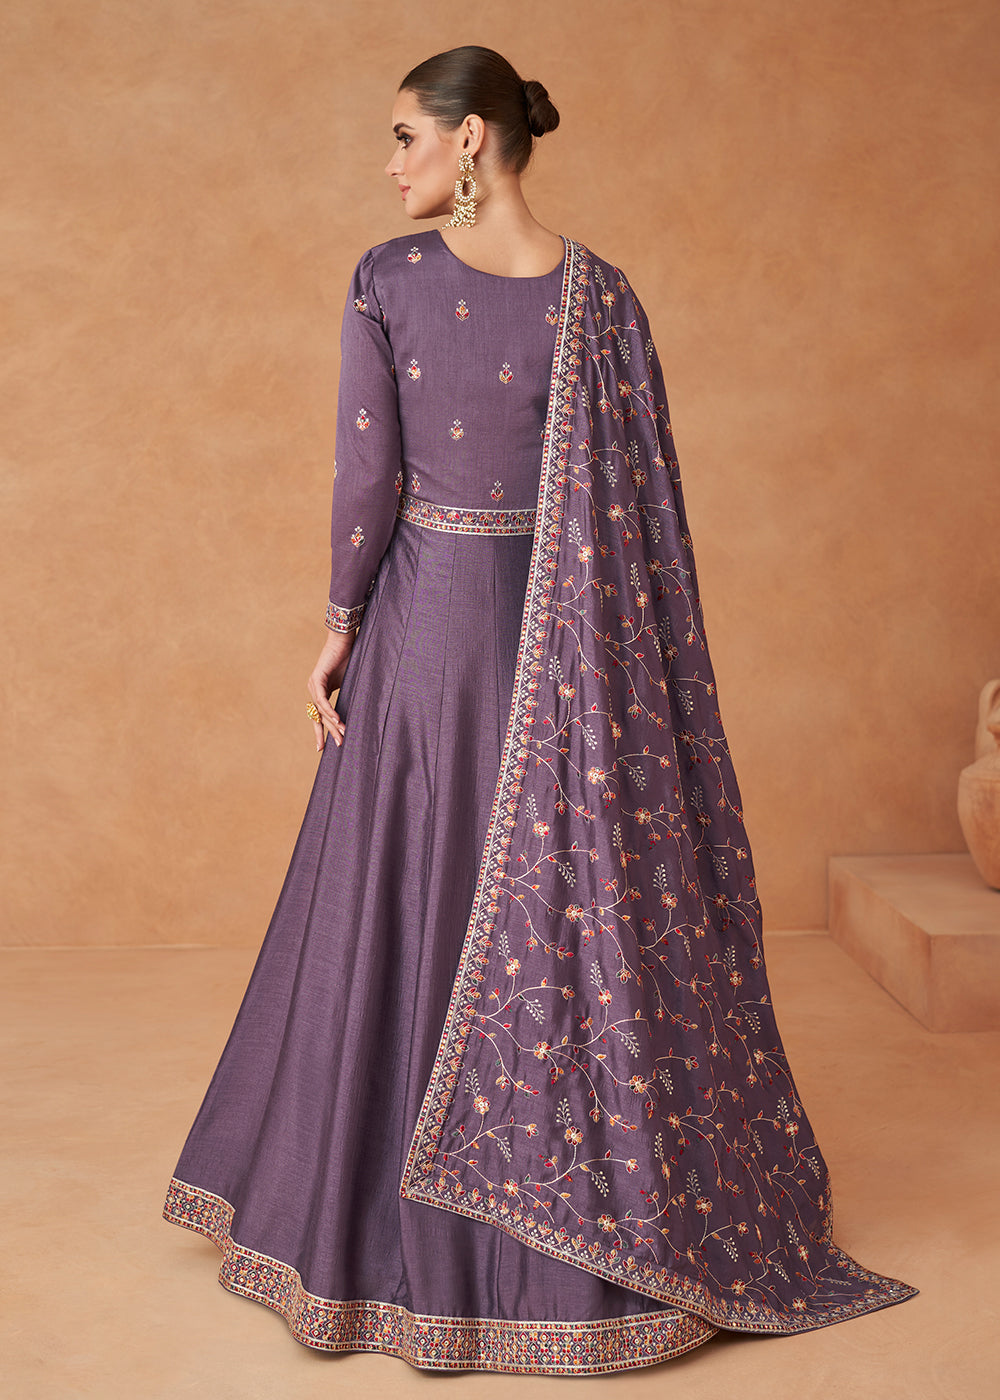 Buy Now Premium Purple Sequins & Thread Designer Anarkali Suit Online in USA, UK, Australia, New Zealand, Canada & Worldwide at Empress Clothing.